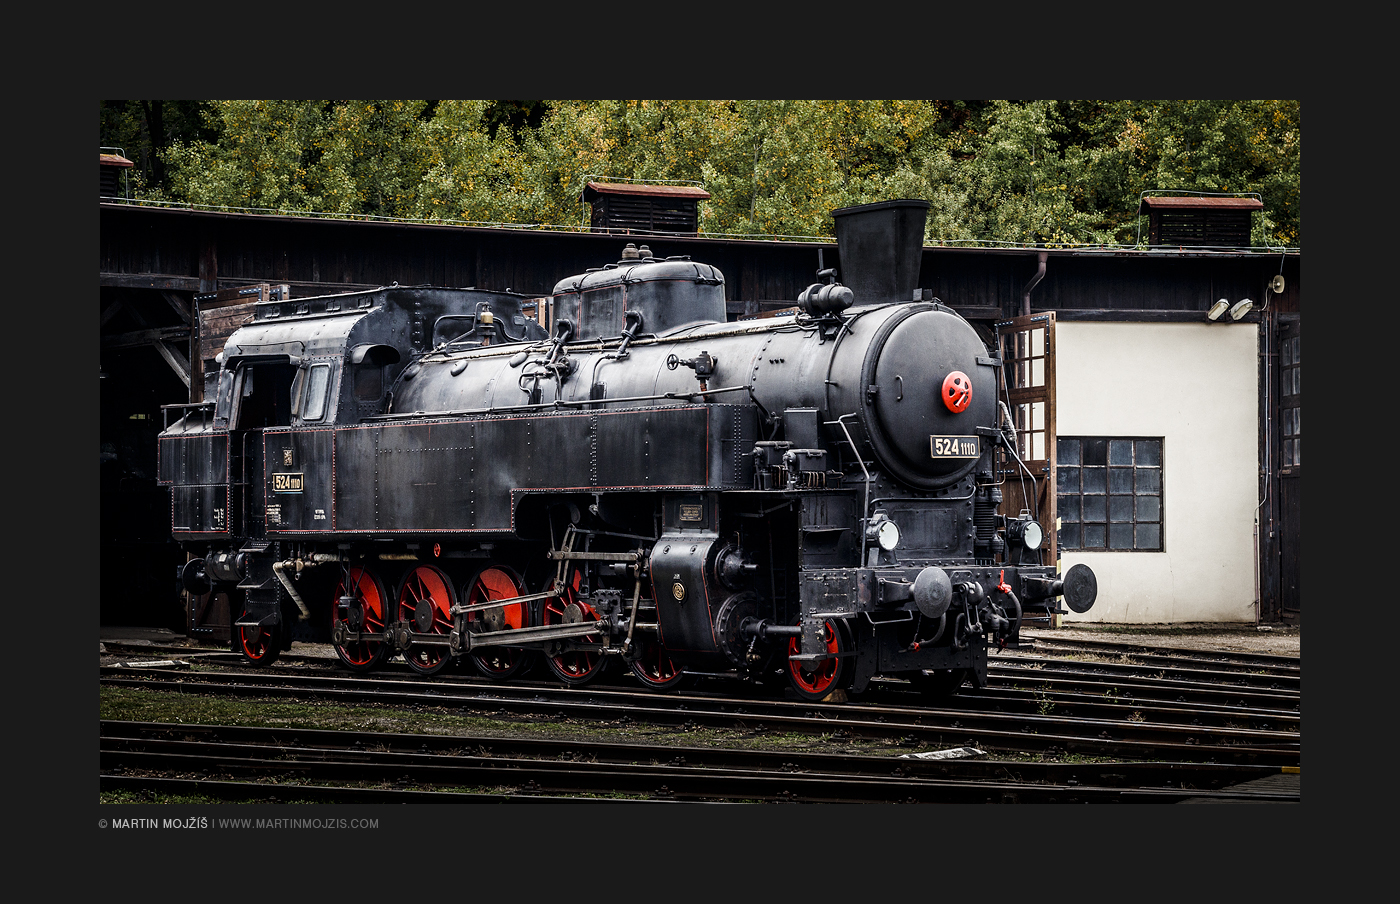 Steam locomotive 524 1110. Railway (railroad) museum in Luzna near Rakovnik.